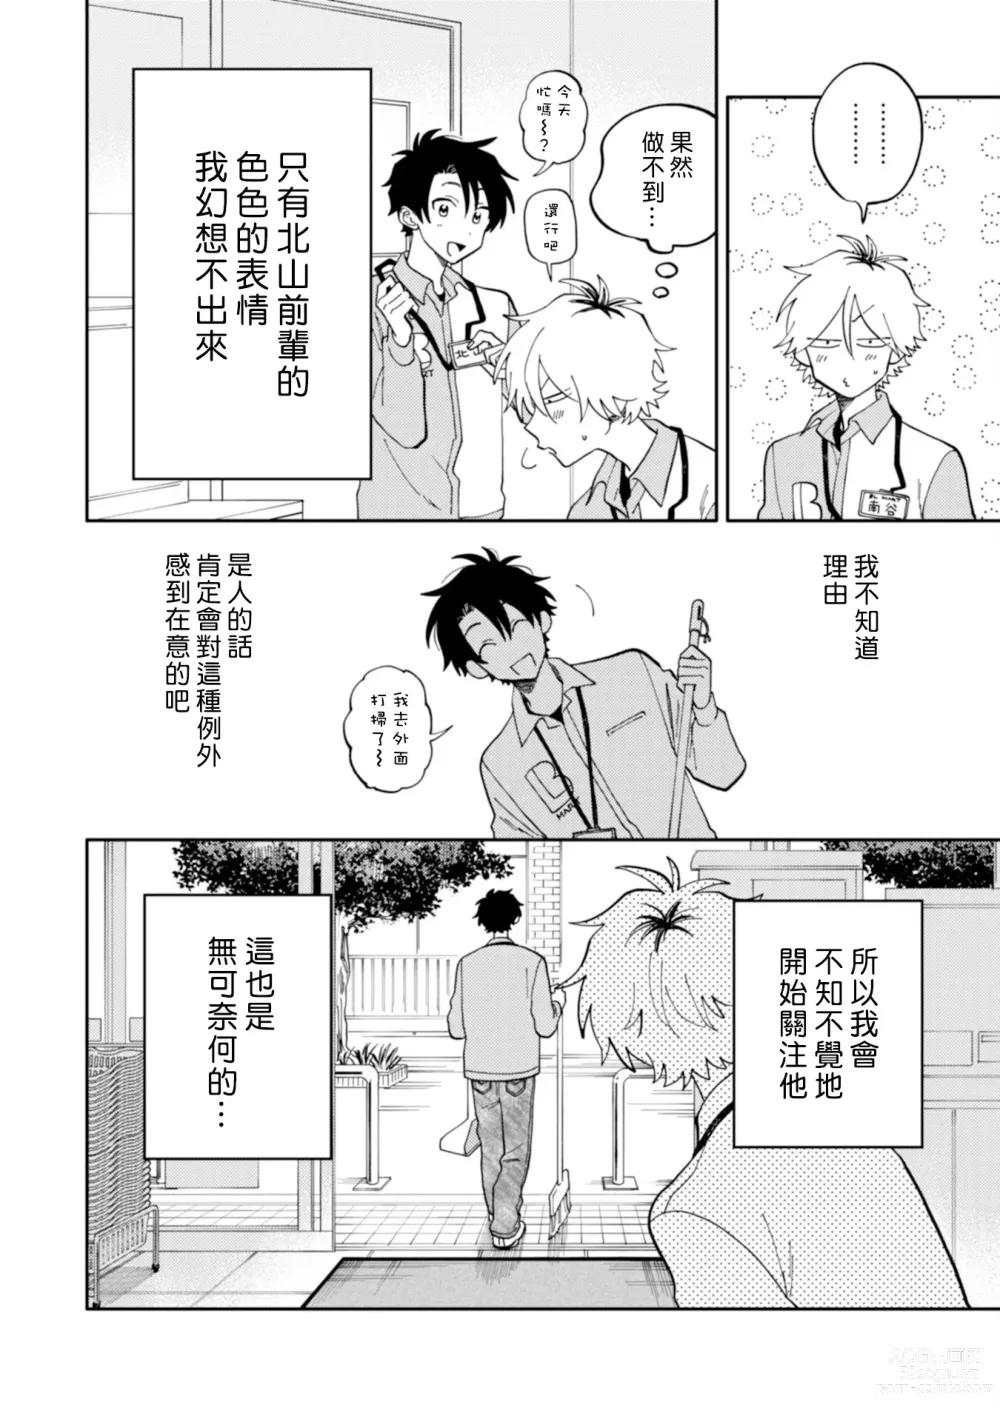 Page 10 of manga 北山君与南谷君